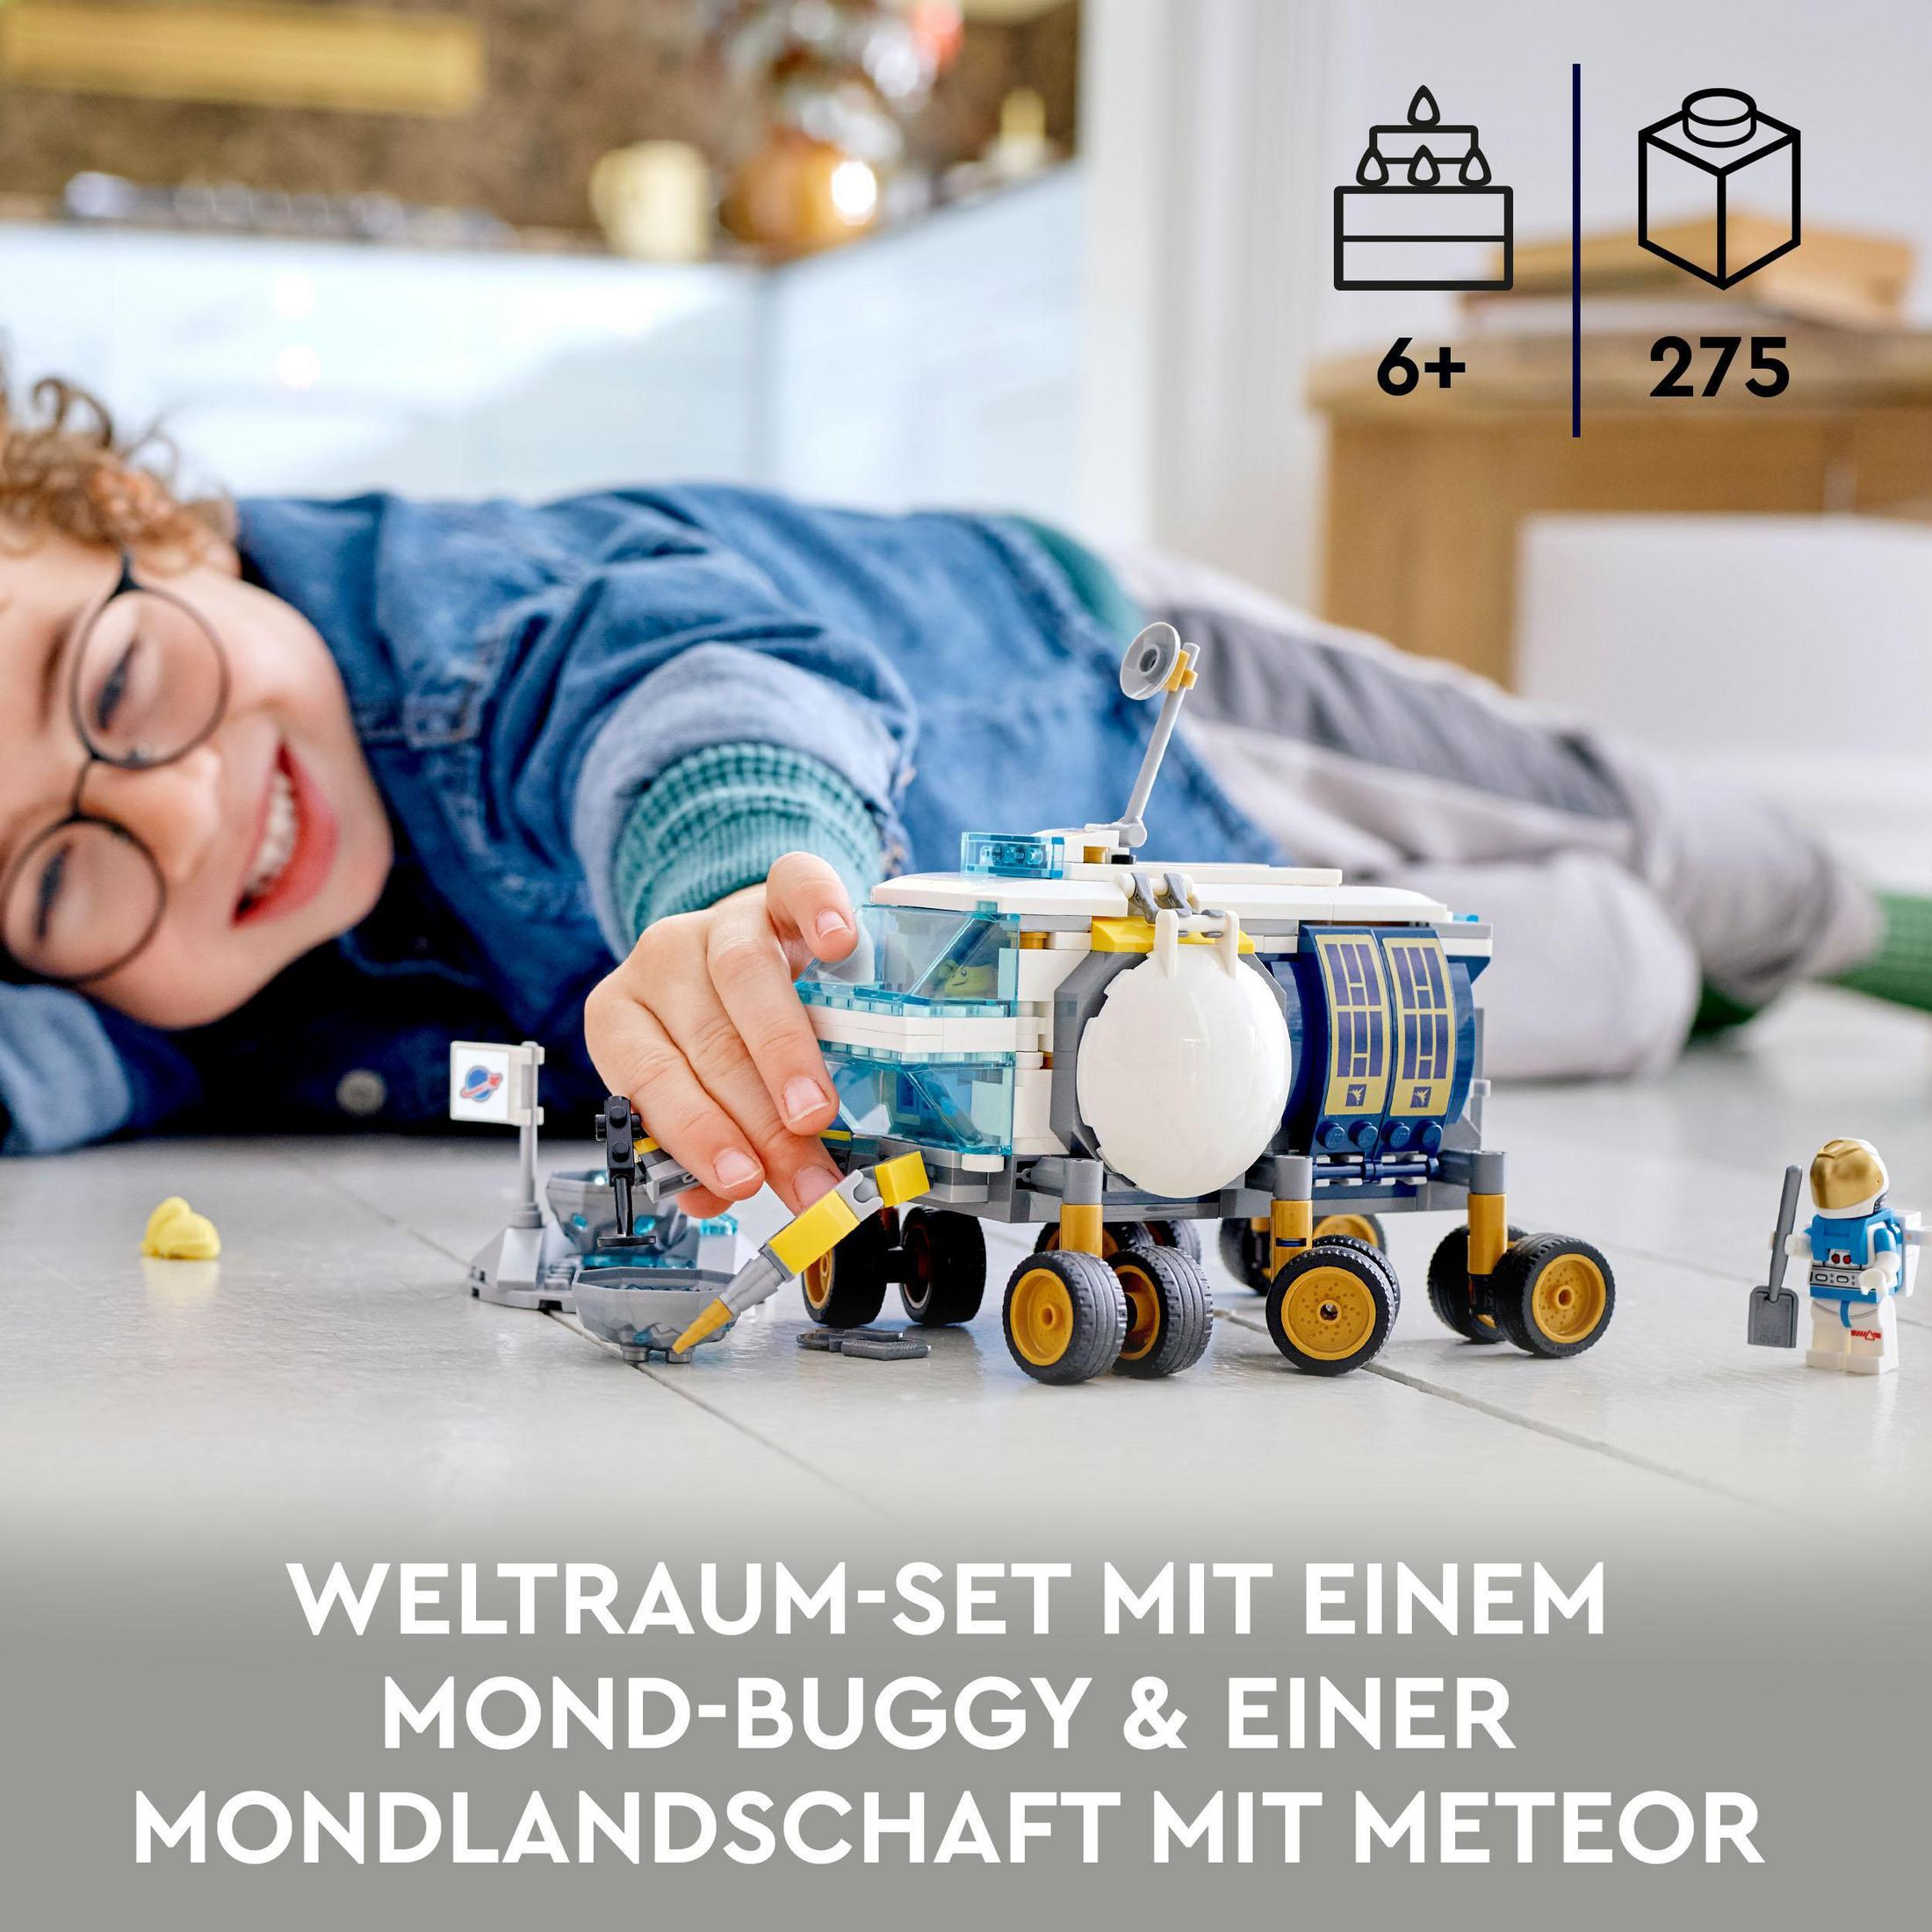 LEGO 60348 MOND-ROVER Bausatz, Mehrfarbig